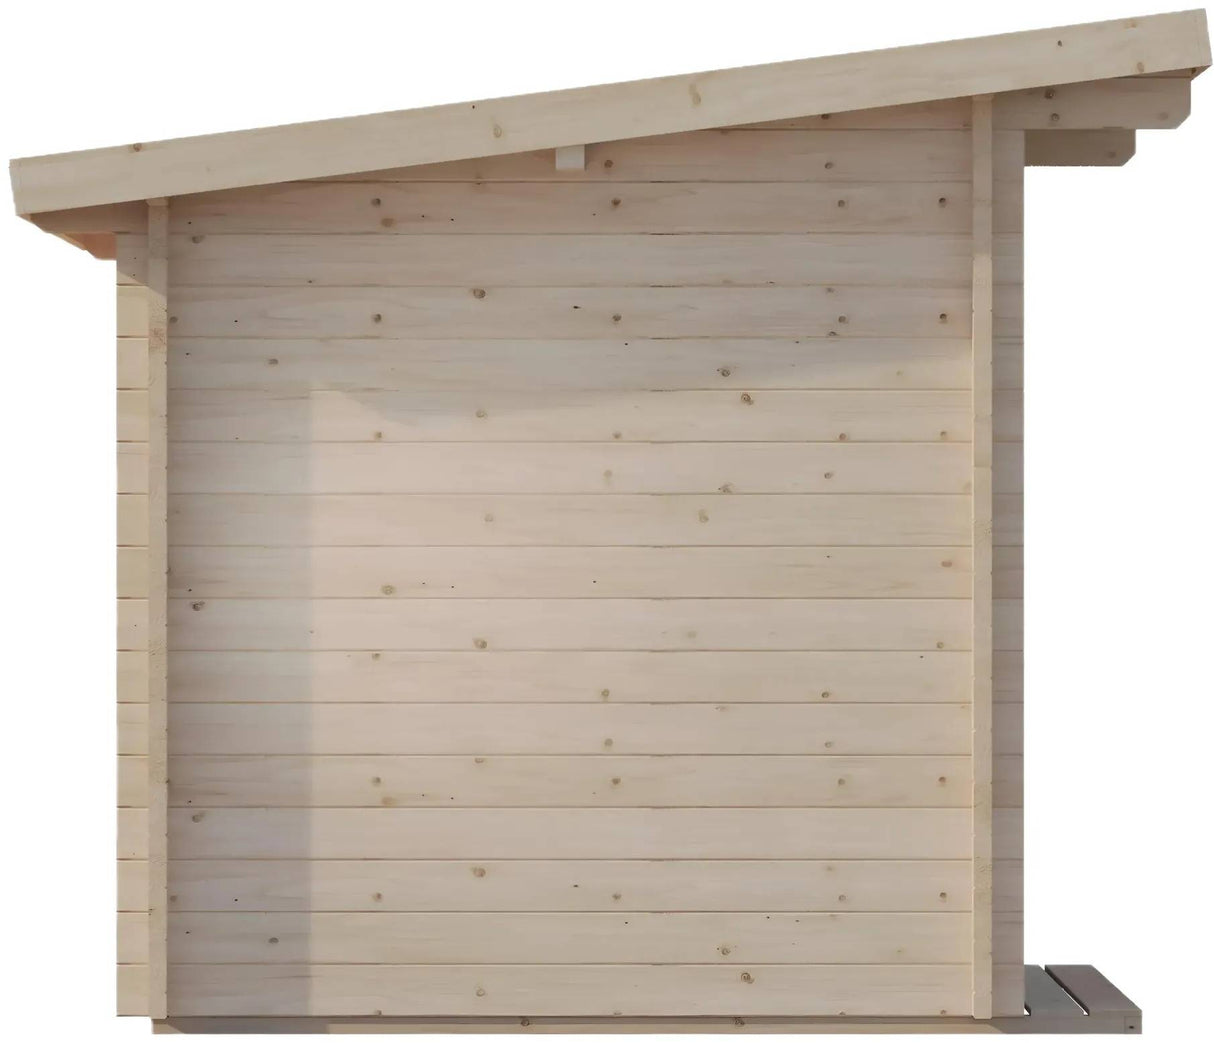 ZiahCare's SaunaLife Model G4 Outdoor Home Sauna Kit Mockup Image 4